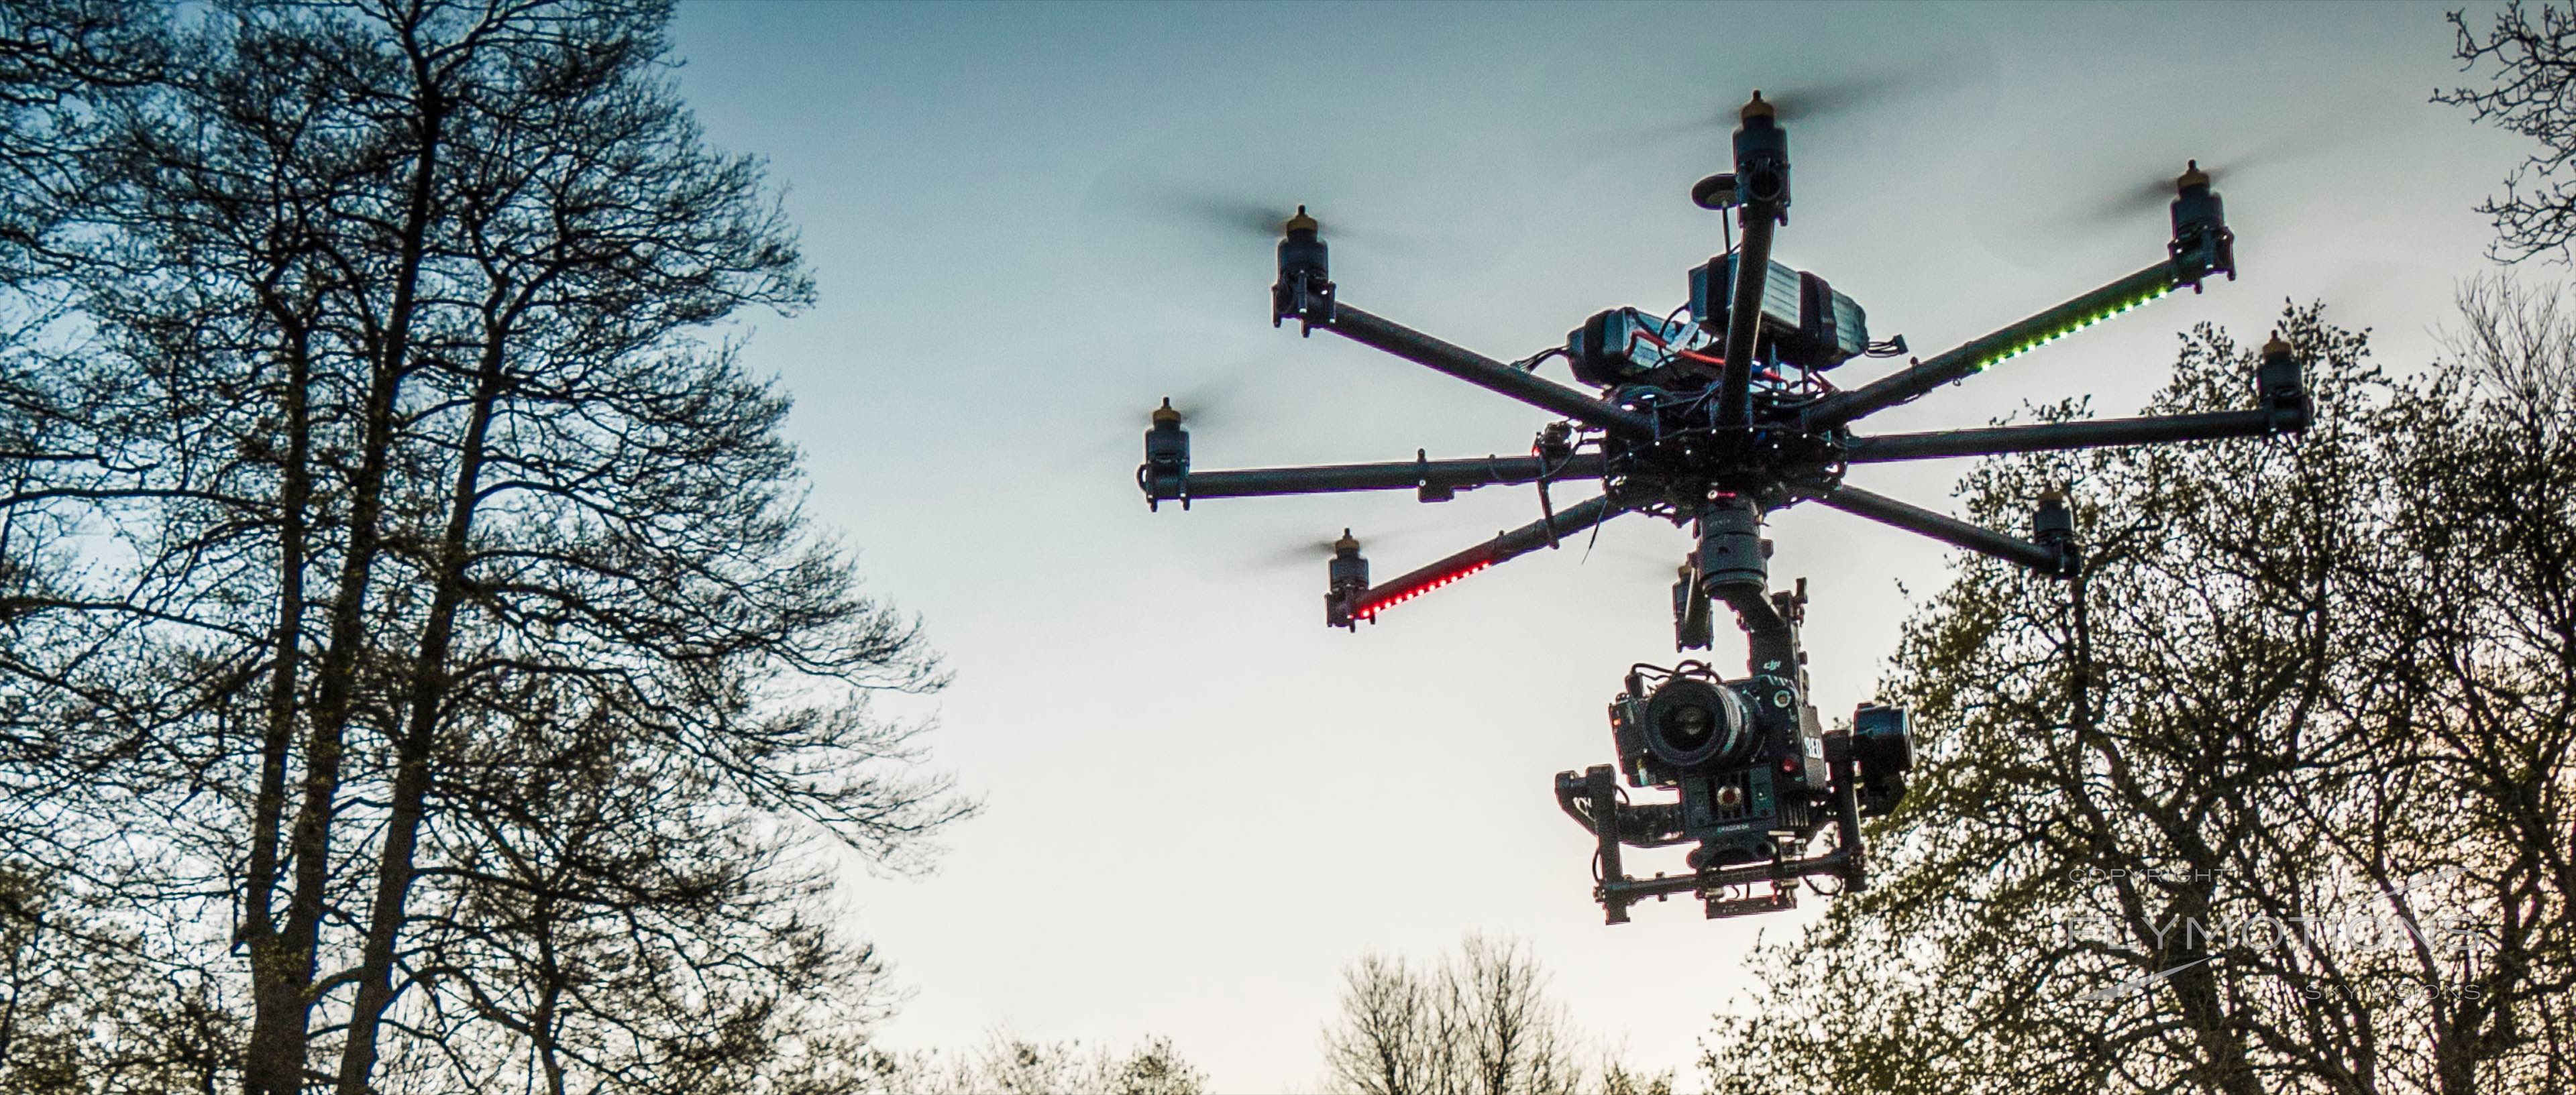 drone-cinestar8-octocopter-reddragon aerials